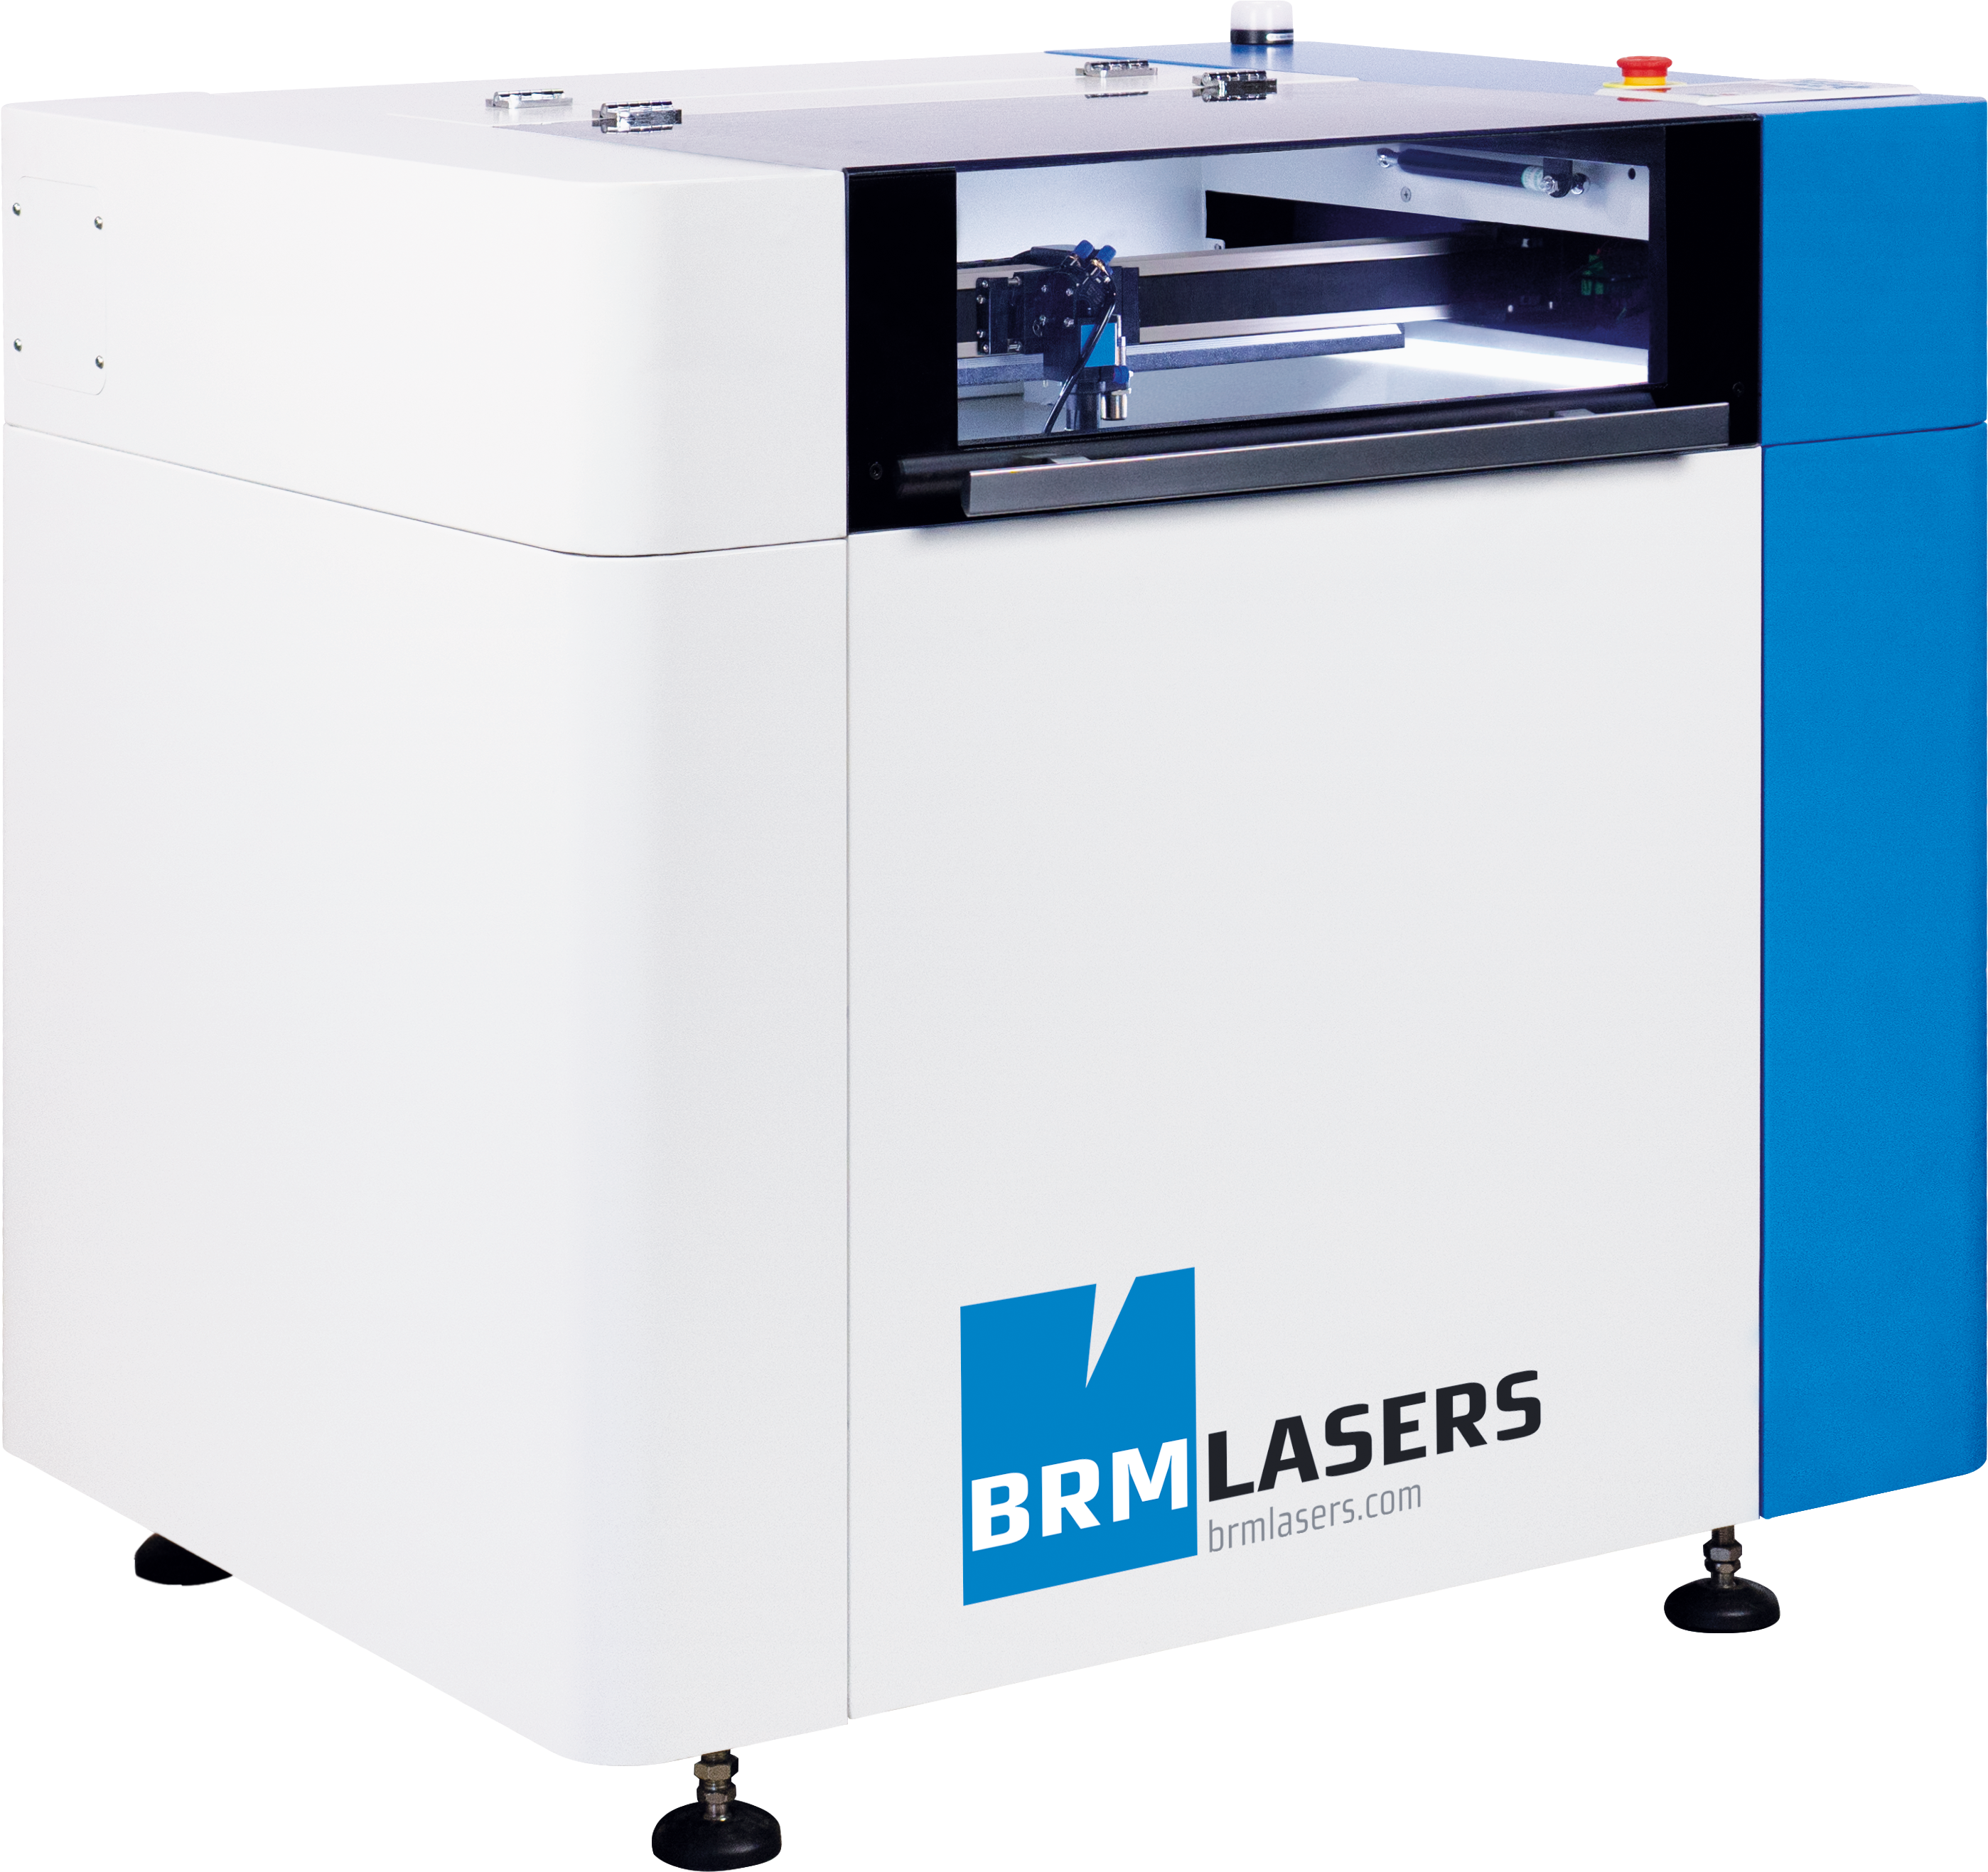 BRM laser PRO 600